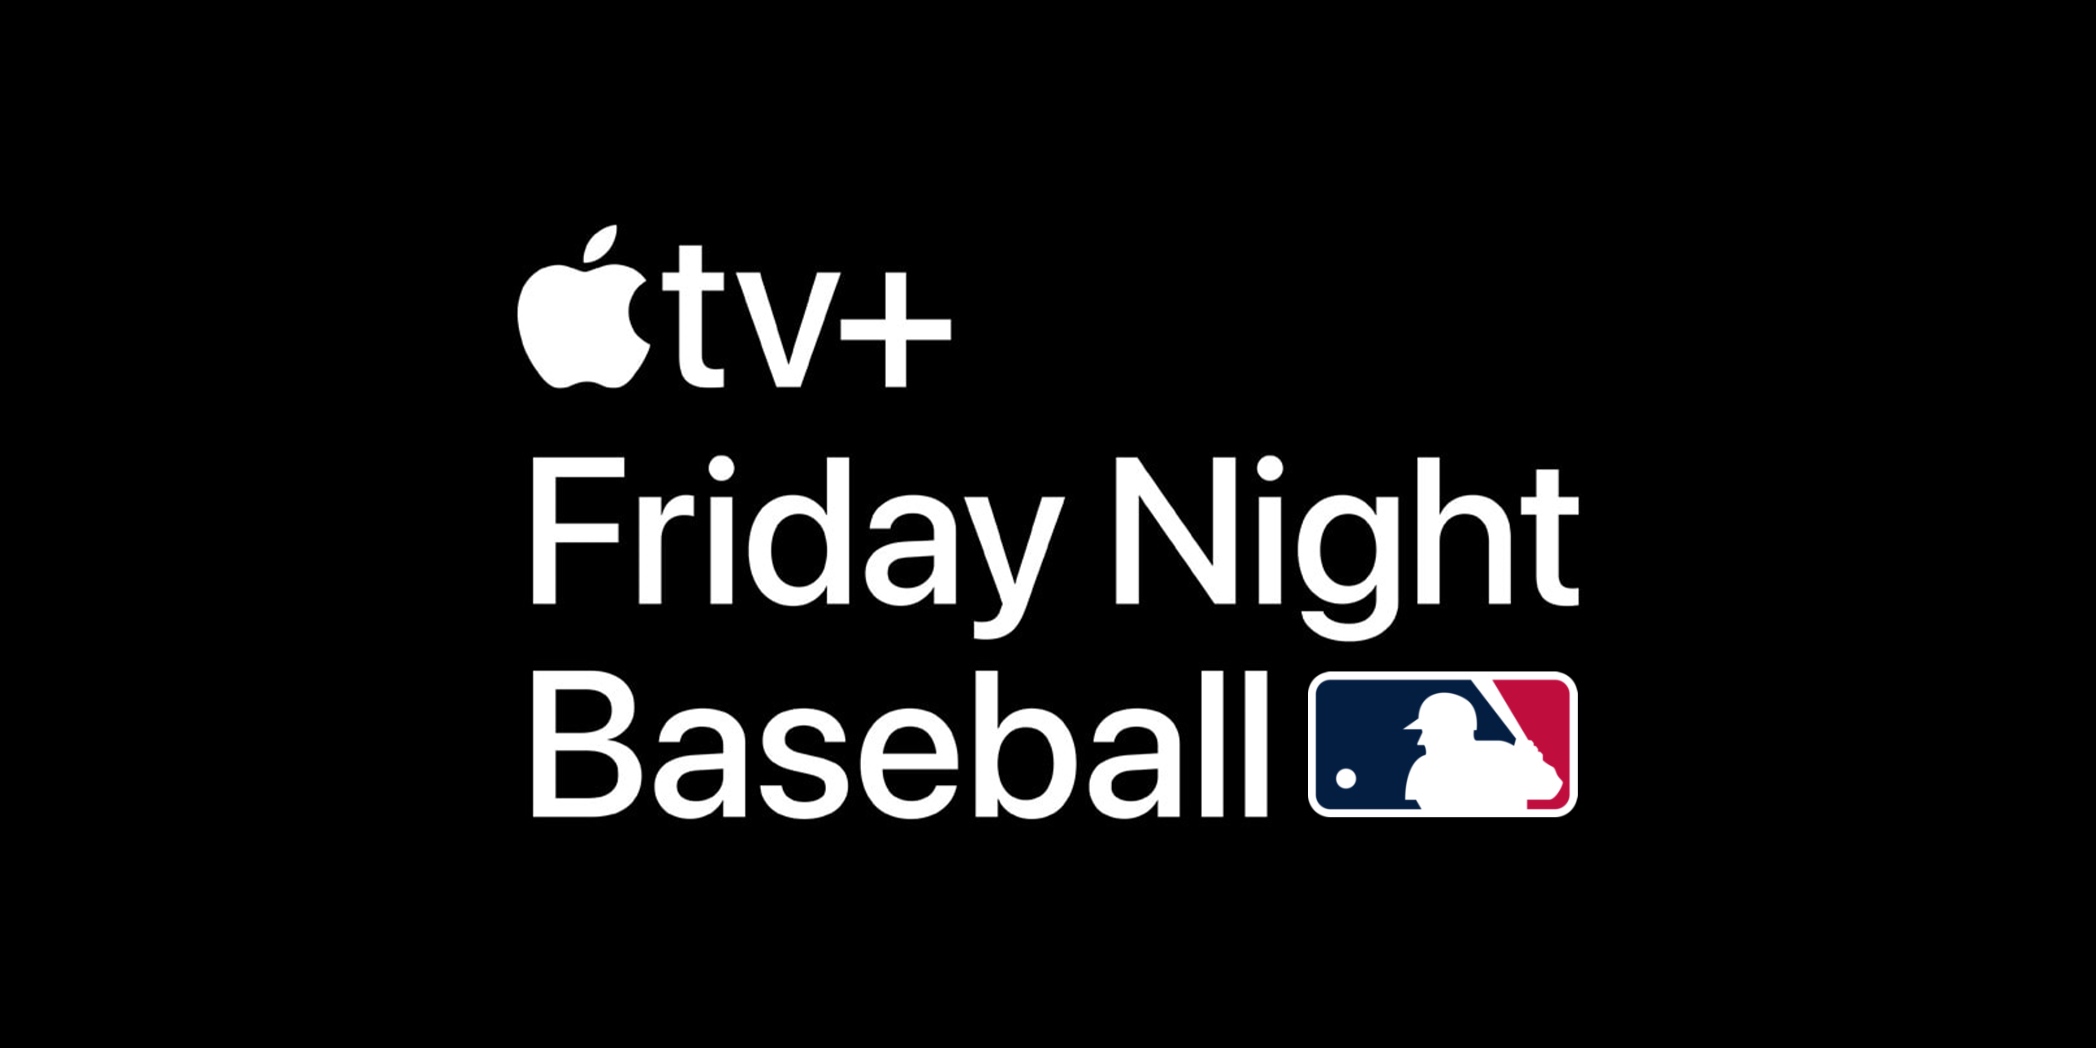 MLB.TV app for iOS and Apple TV overhauled for 2022 season - 9to5Mac